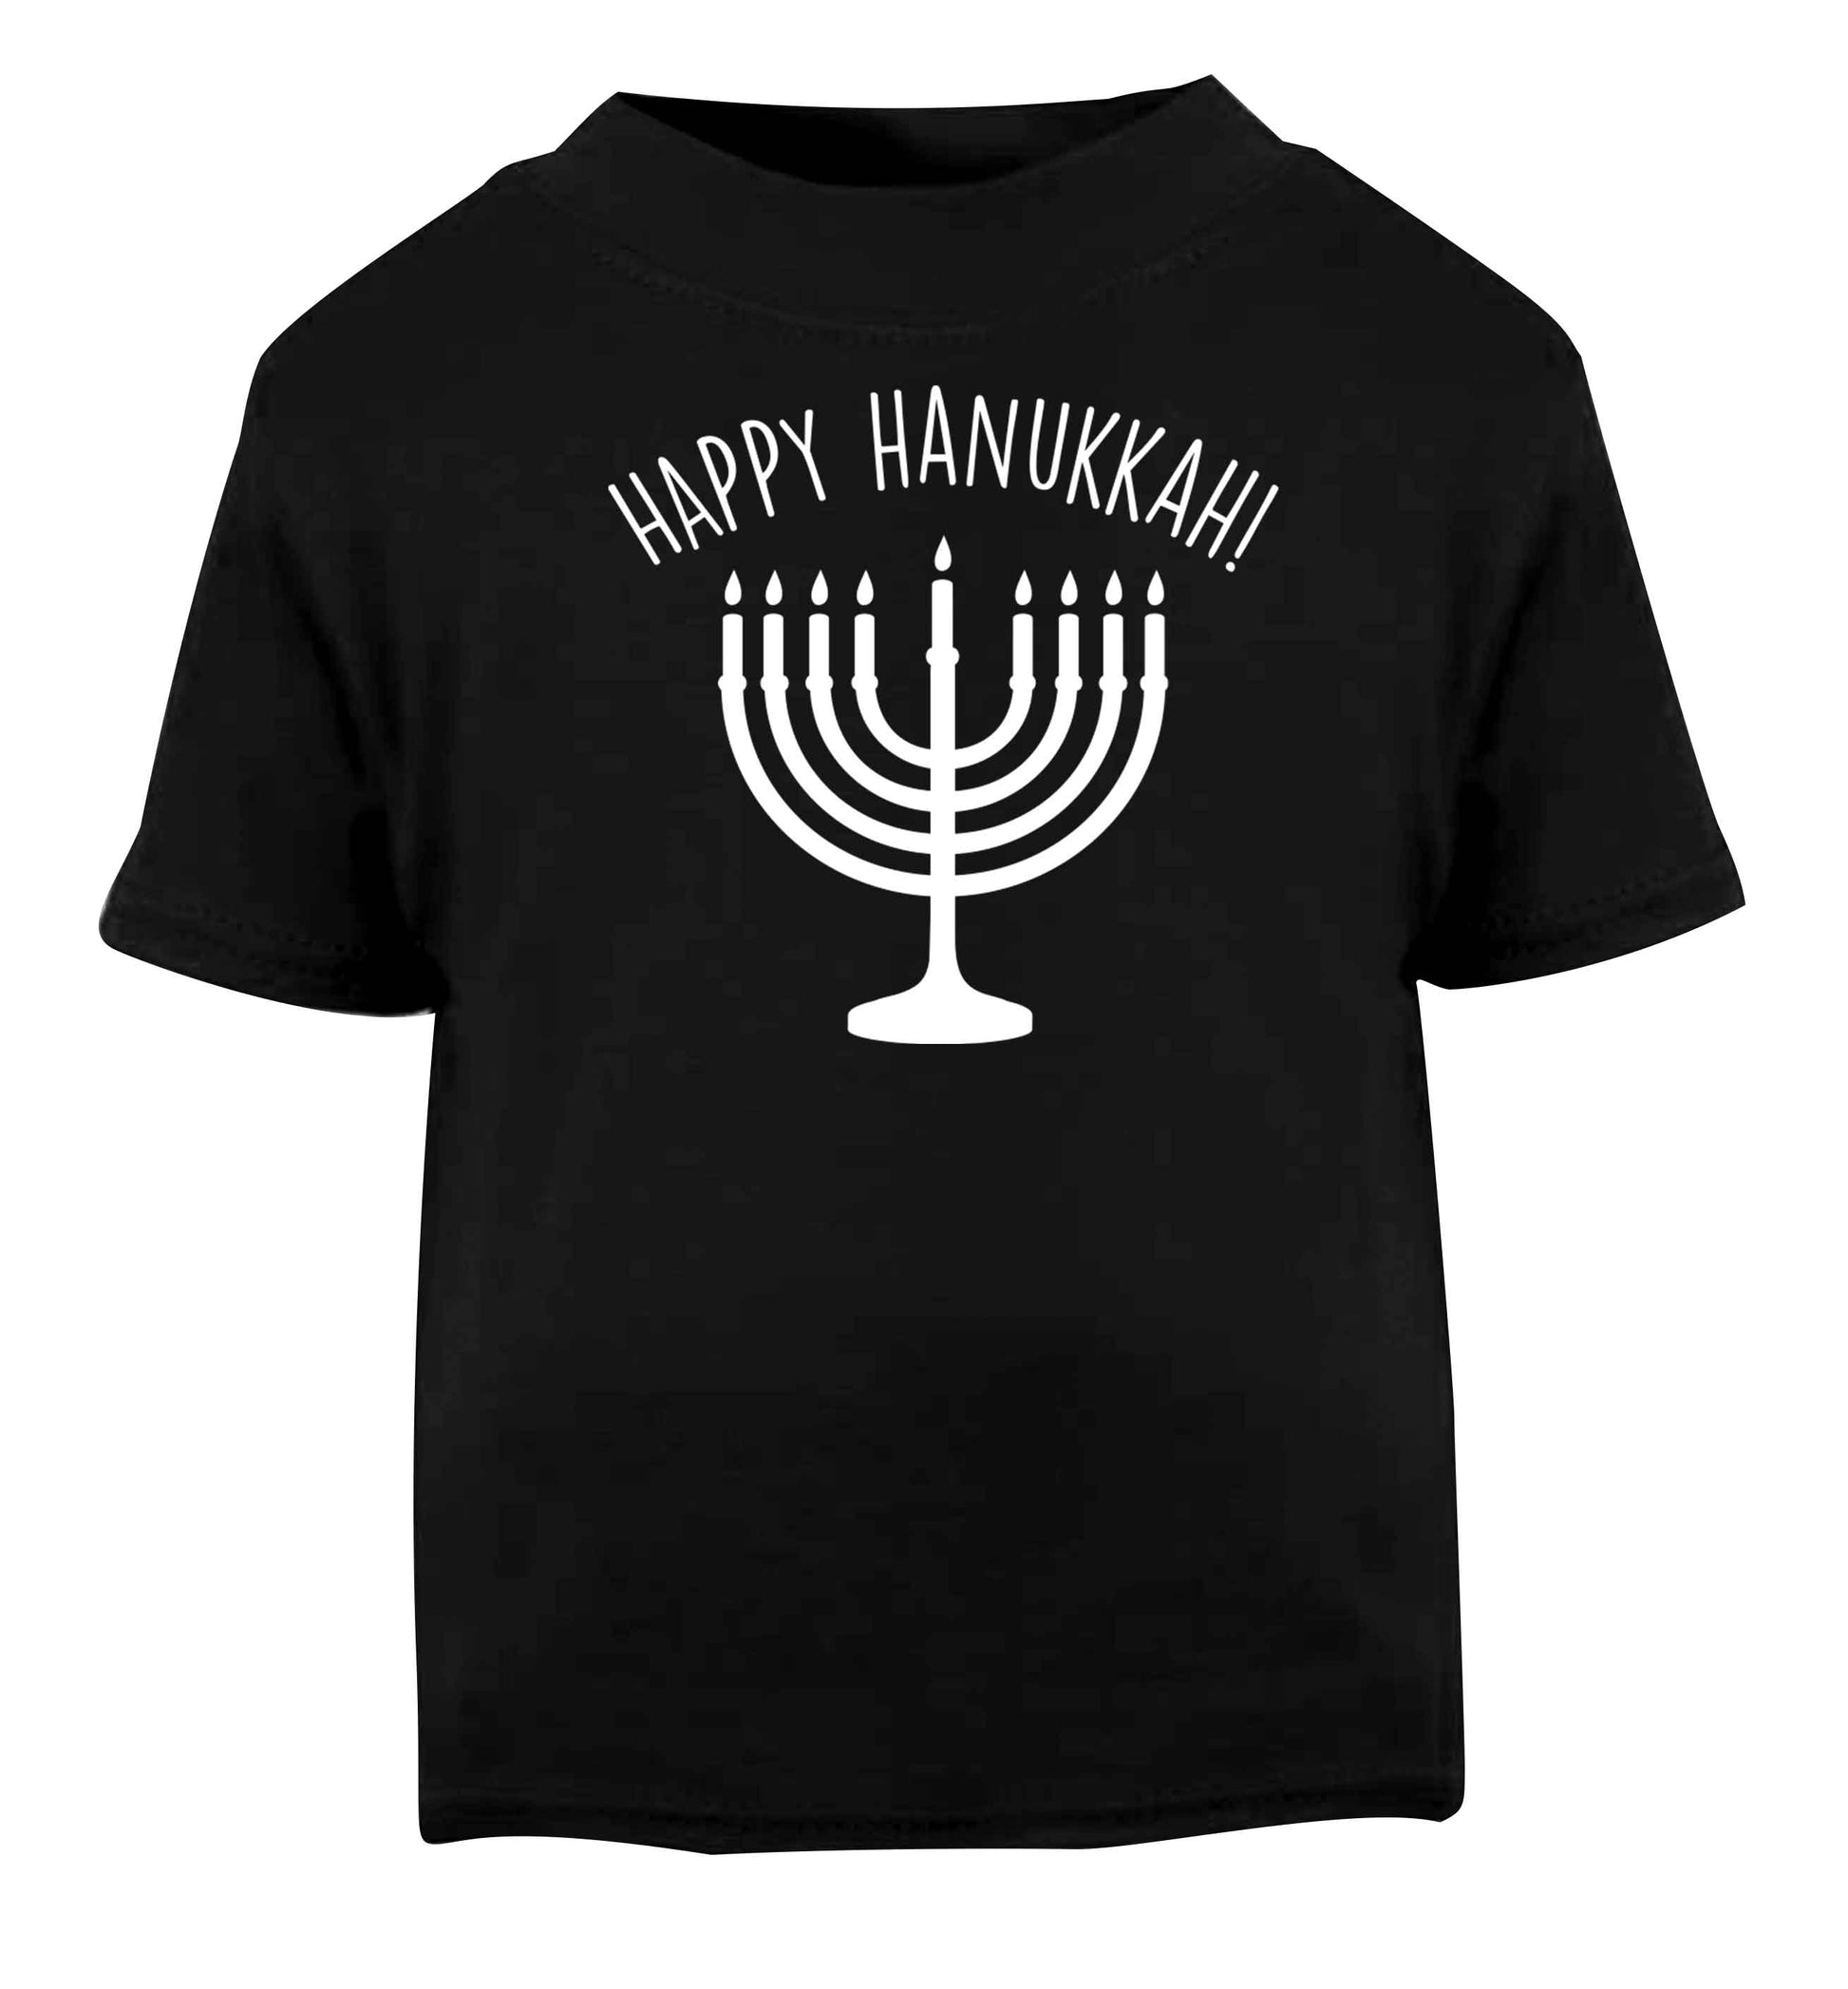 Happy hanukkah Black baby toddler Tshirt 2 years